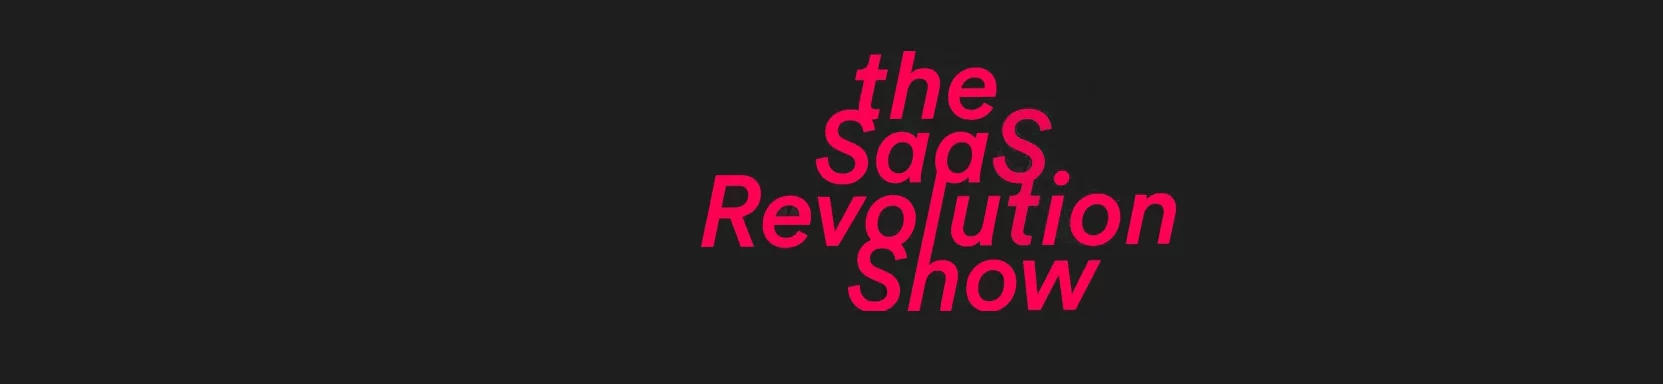 the SaaS Revolution Show Podcast